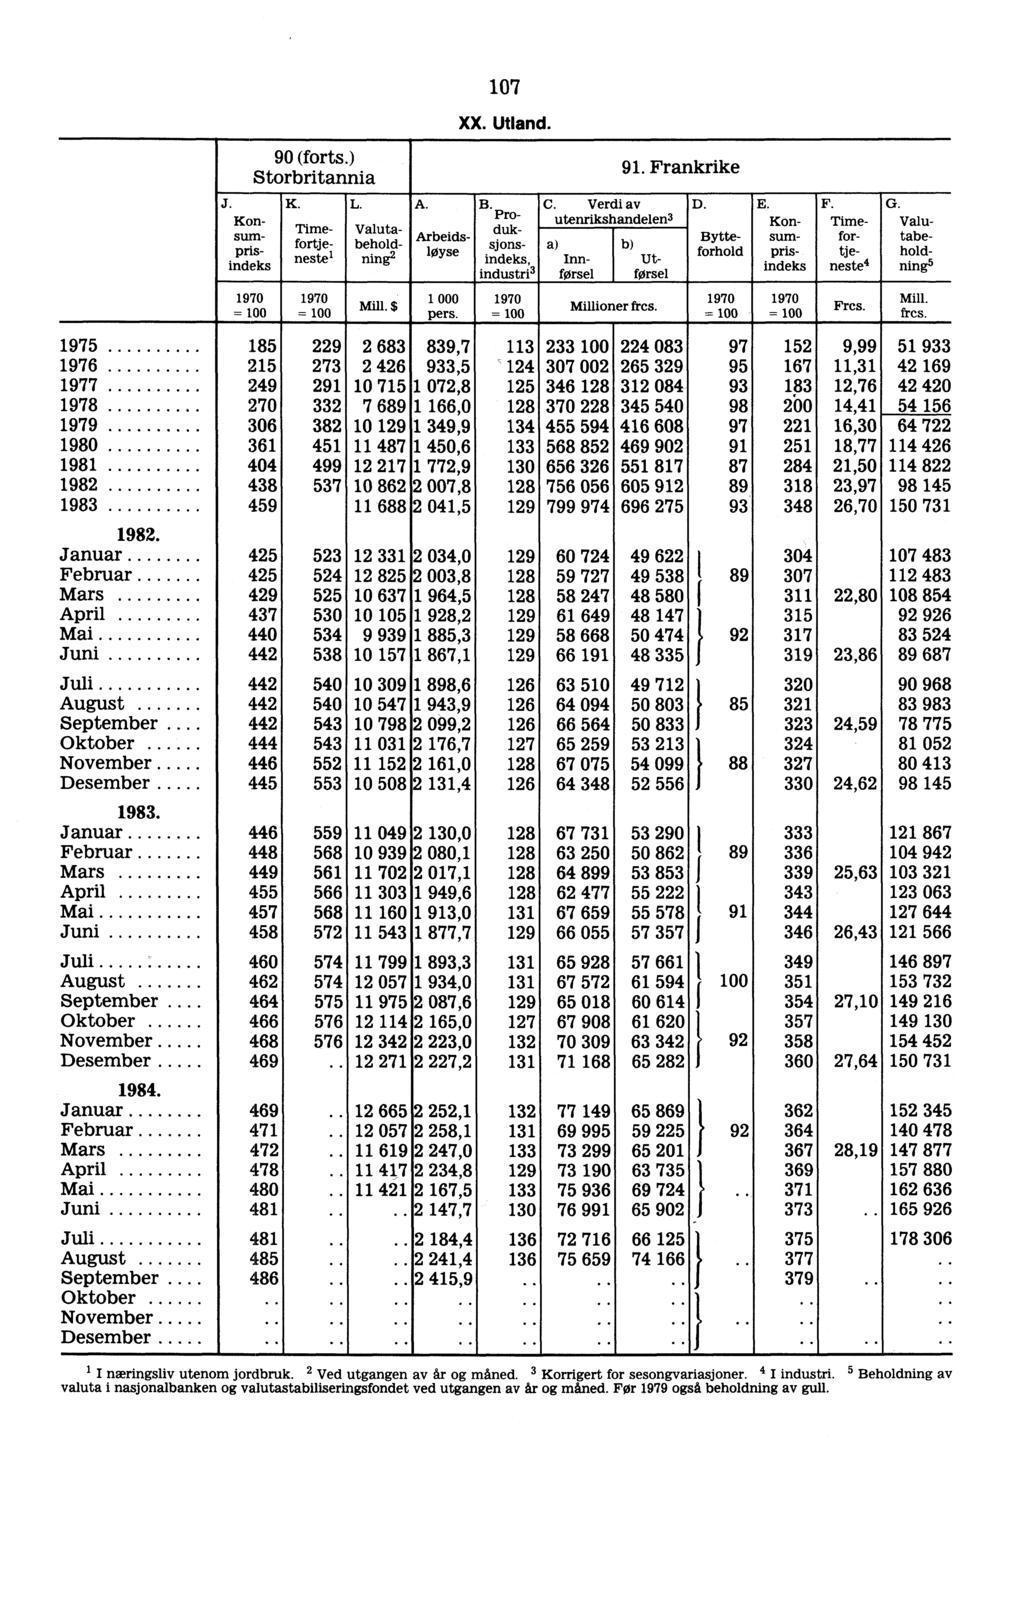 9 0 (forts.) Sto rbritannia 1970 = 100 K. J. Konsumprisindeks Timefortjeneste l 1970 = 100 L. Mill. $ A. Valutabeholdning2 Arbeidsløyse 107 XX. Utland. B. Produksjonsindeks, industri3 1 000 pers.